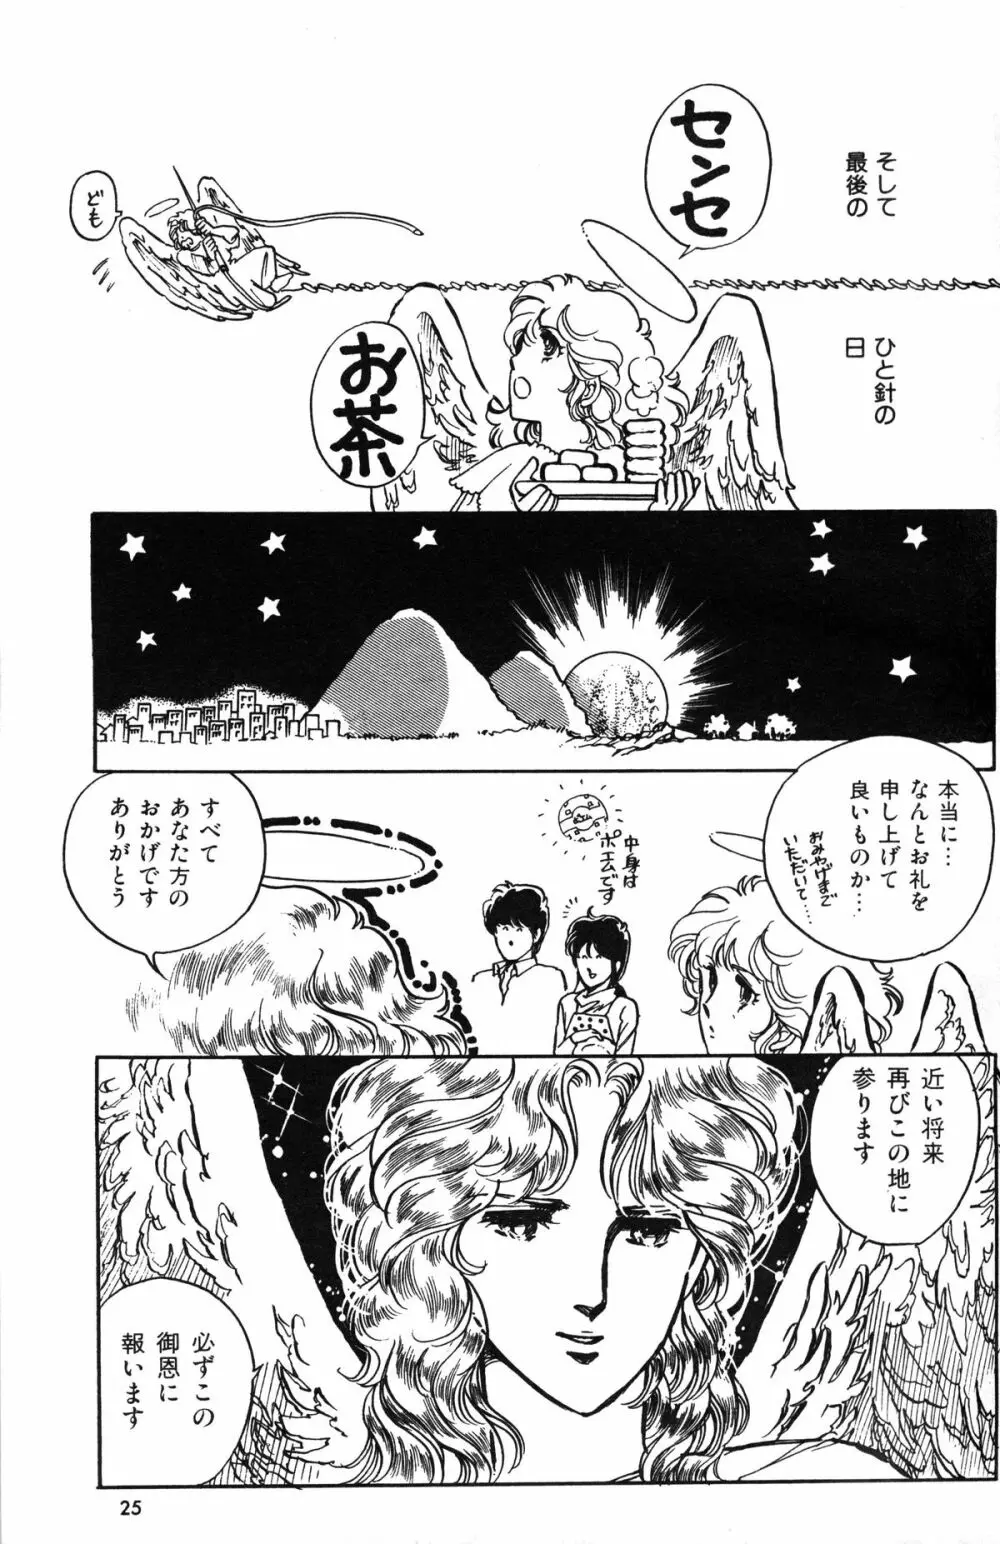 Melon Comic No. 01, メロンコミック 昭和59年6月号 27ページ